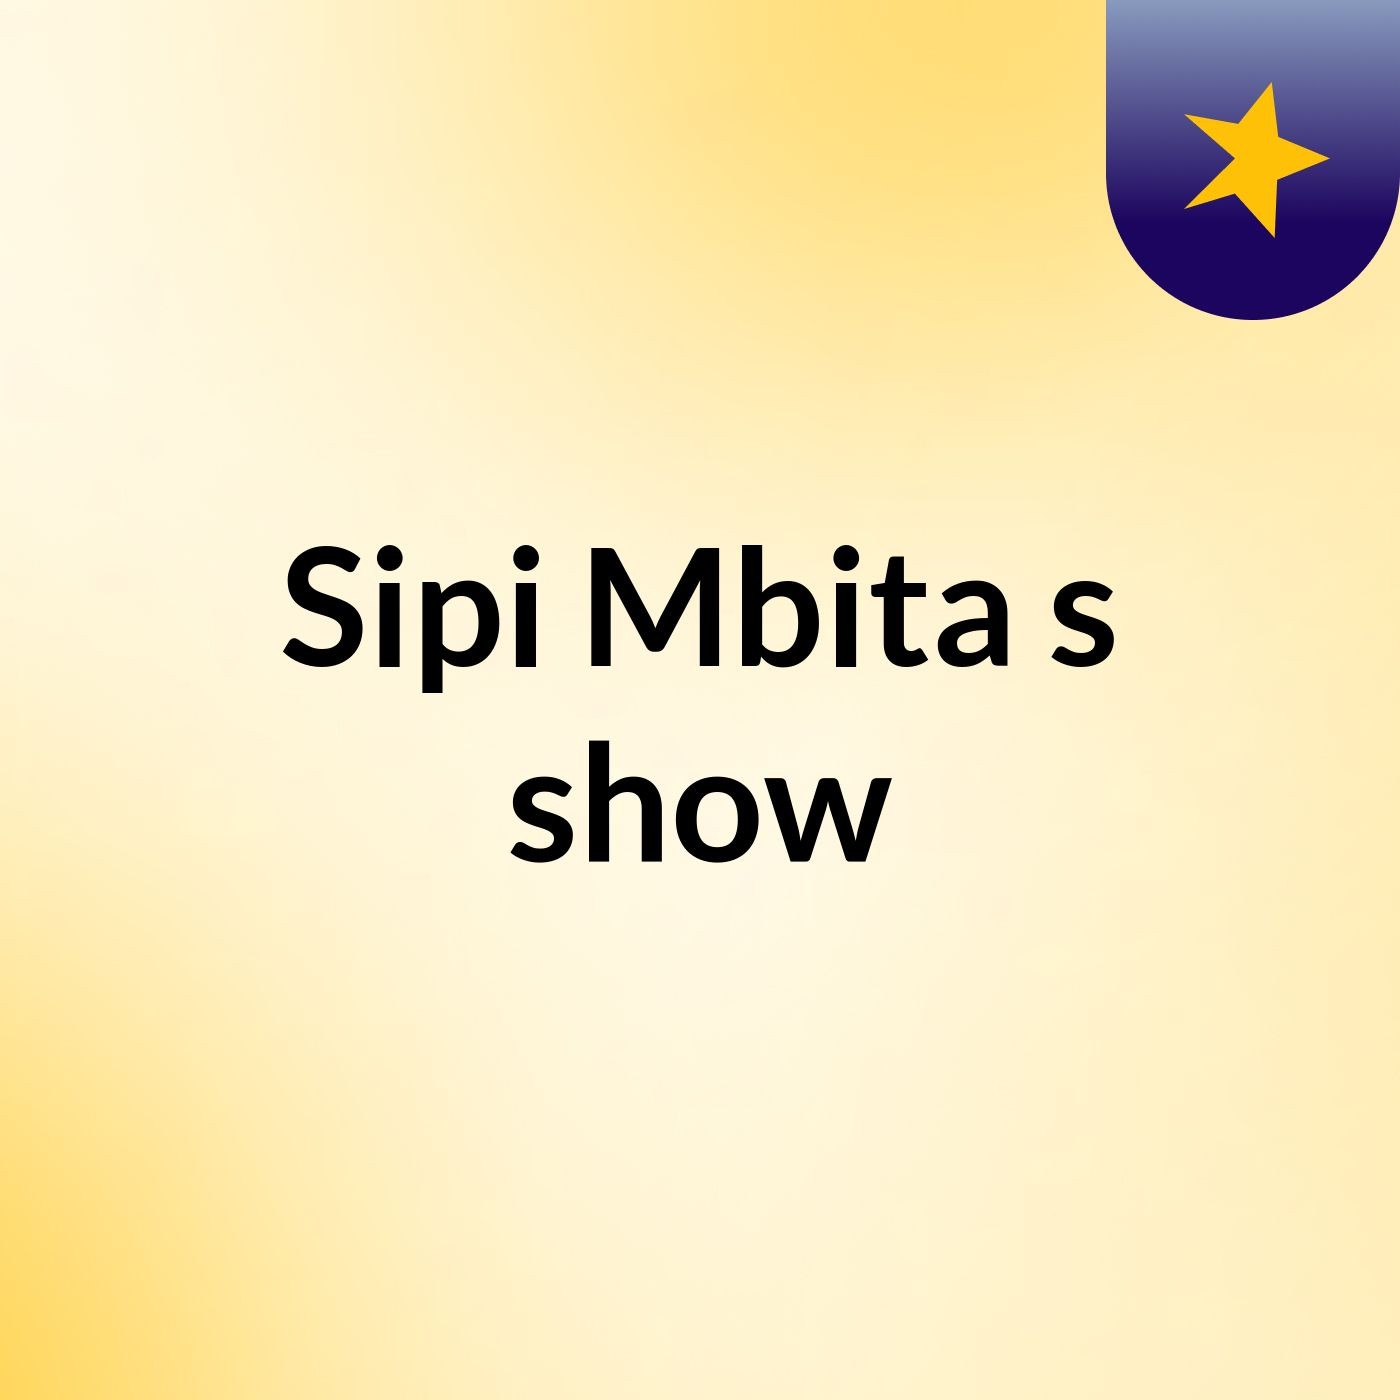 Sipi Mbita's show